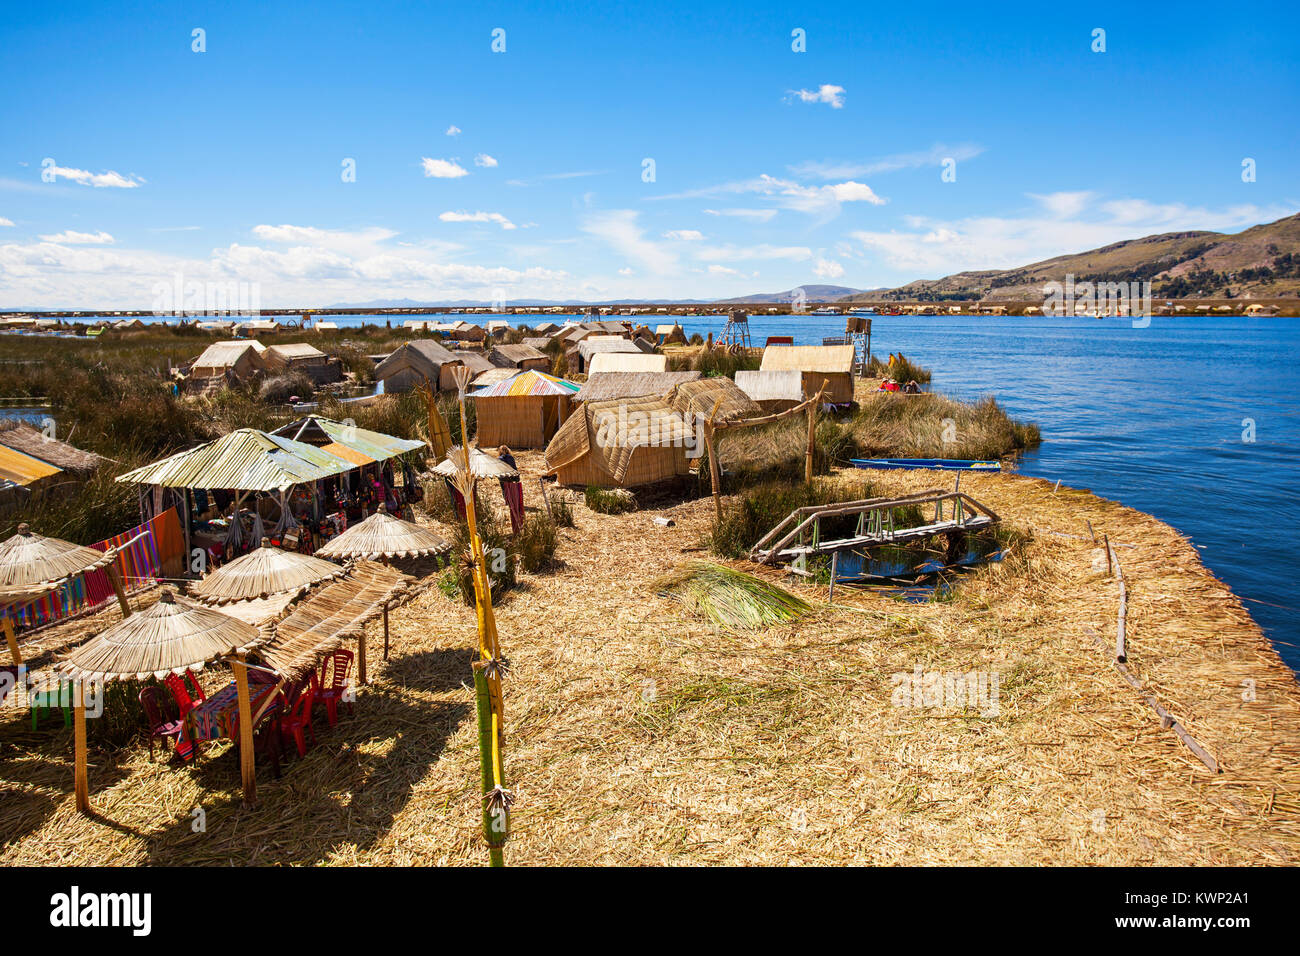 Uros floating island near Puno city, Peru Stock Photo